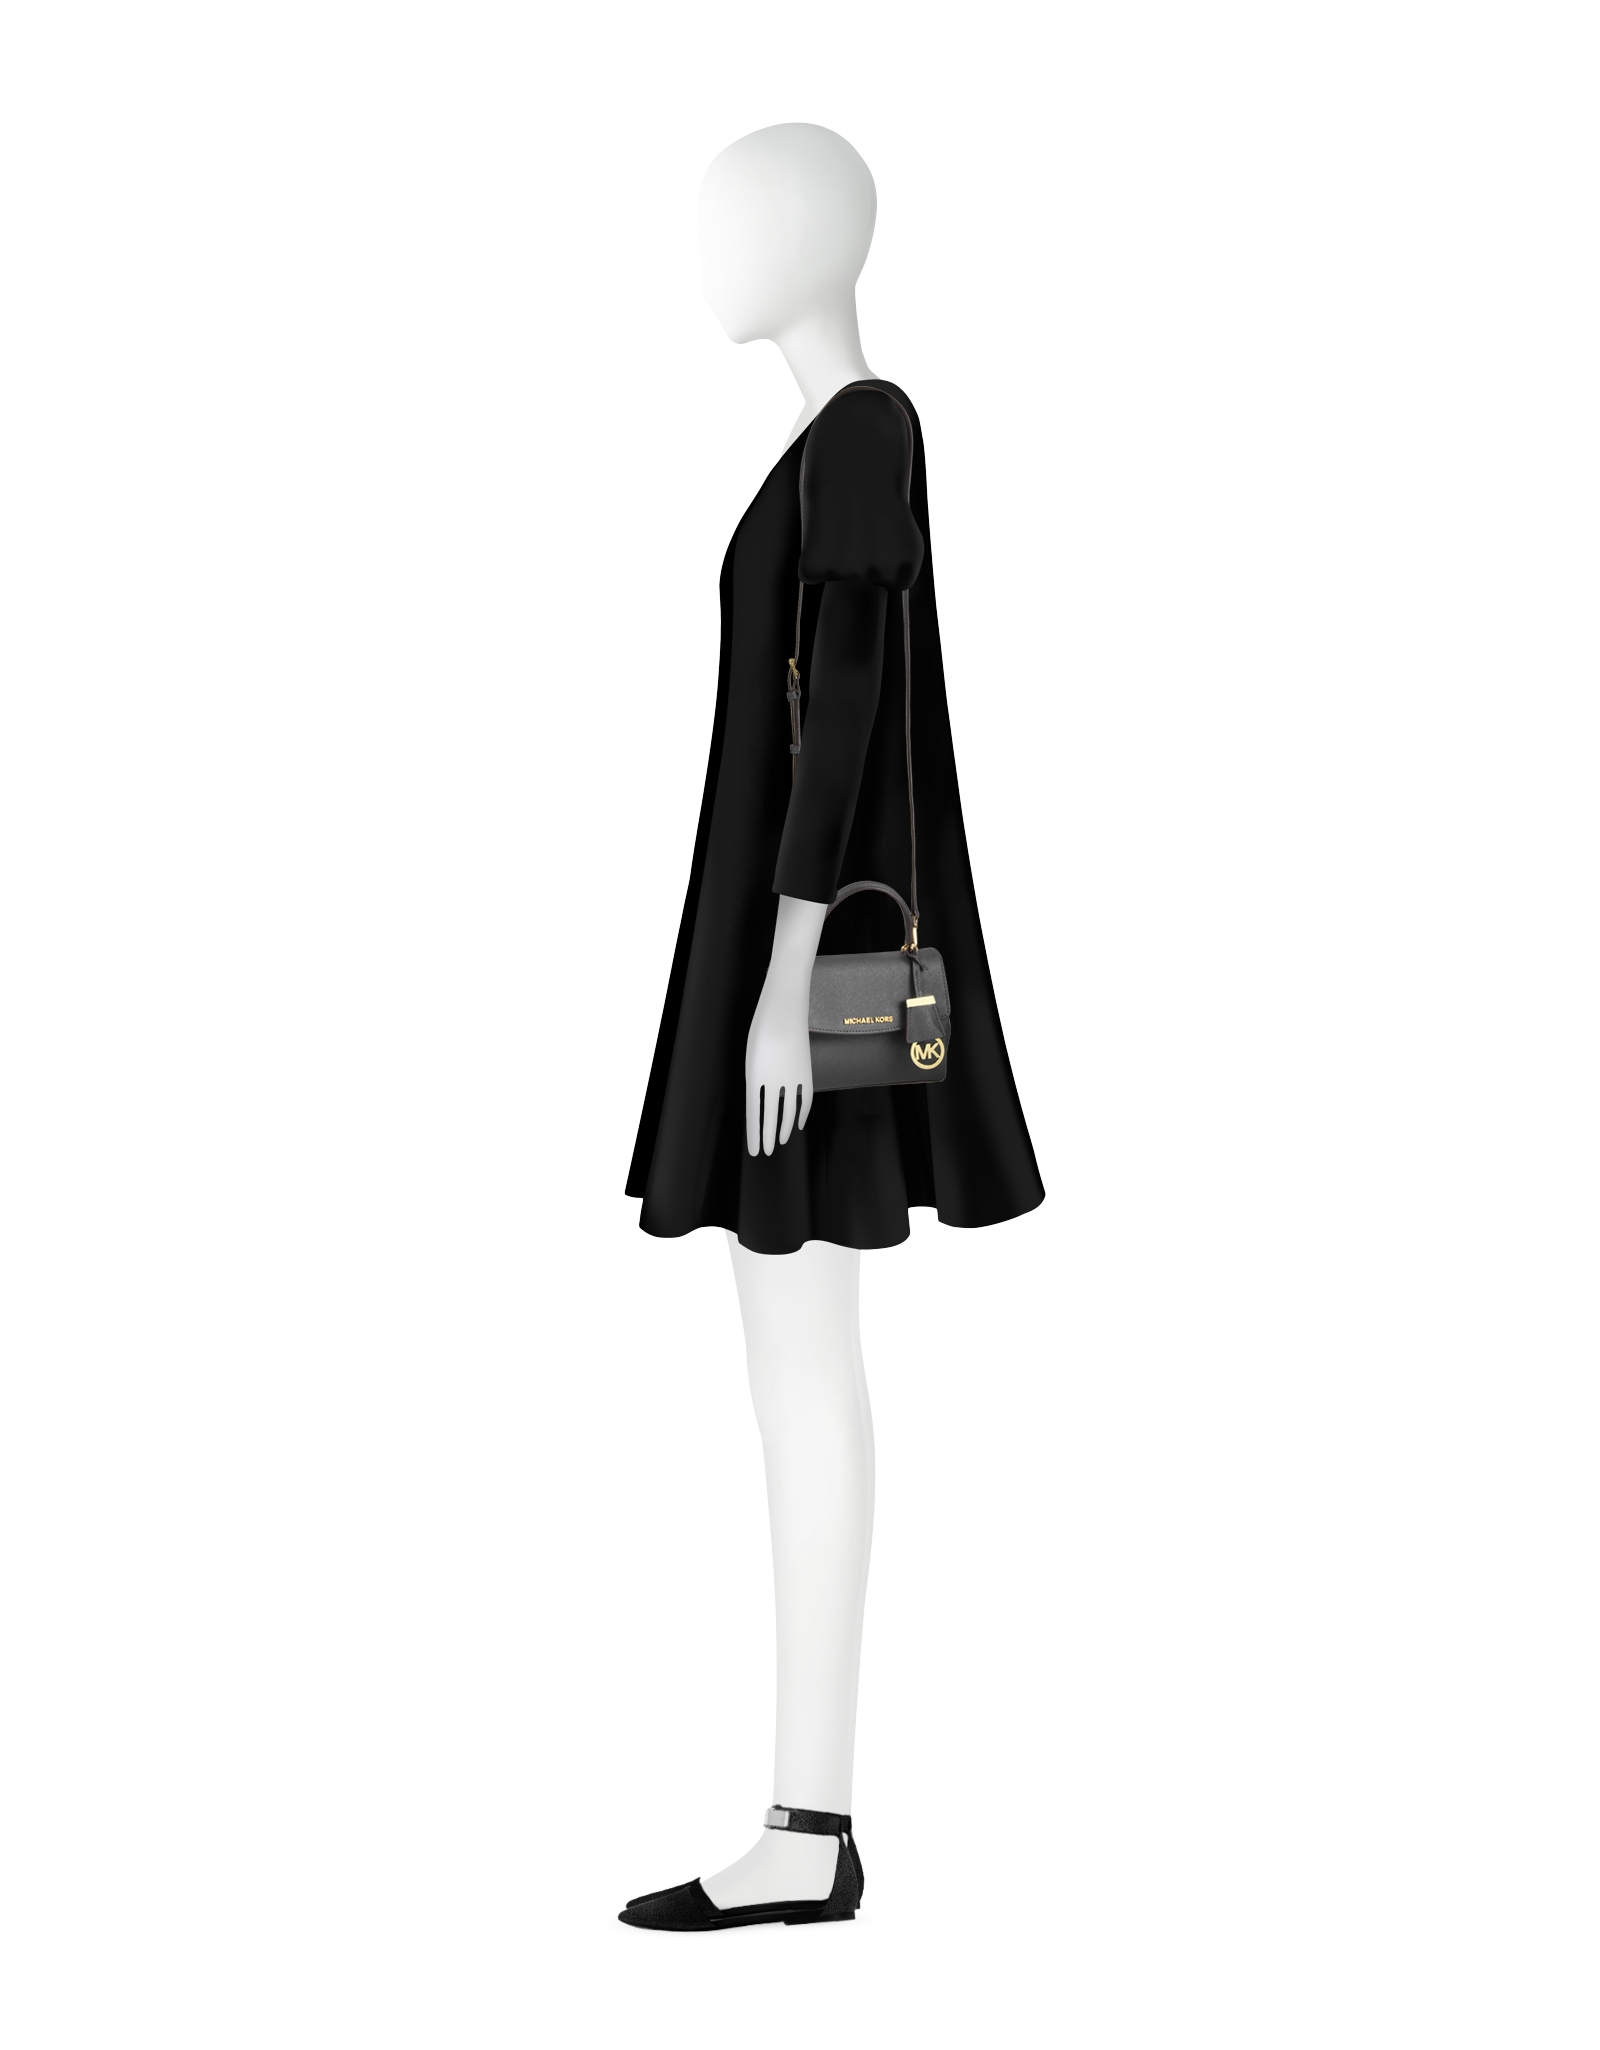 Michael Kors Ava XS Crossbody in Pale Gold, Women's Fashion, Bags